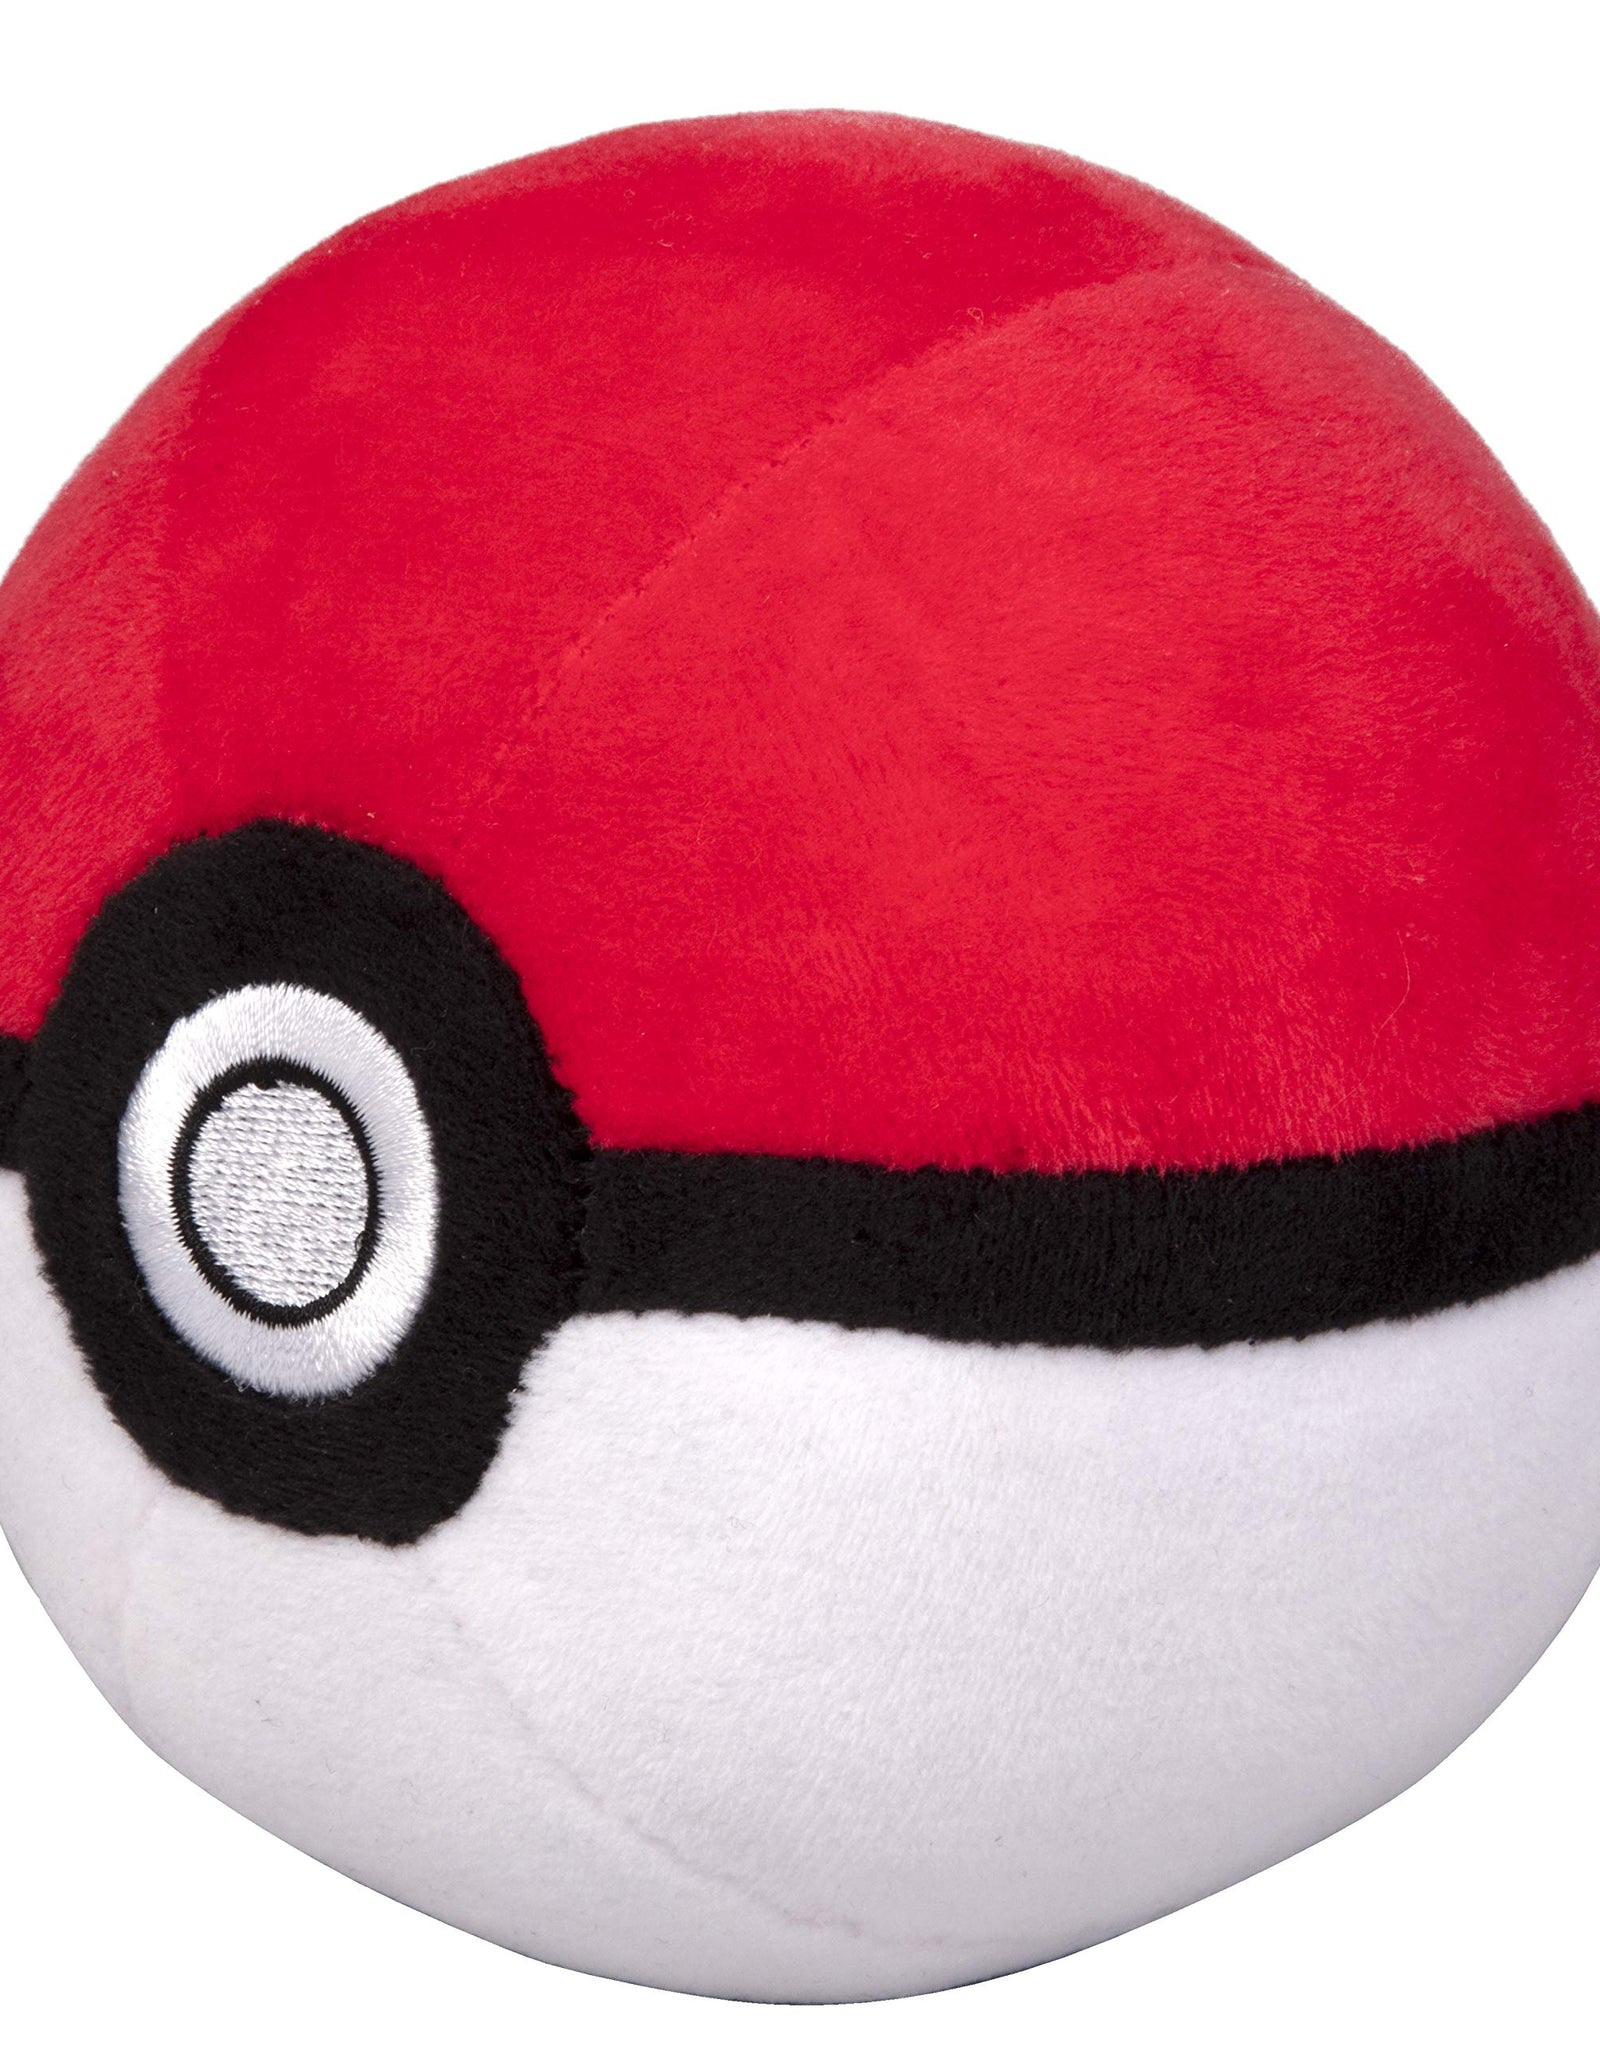 Pokémon 4" Pokéball Plush - Soft Stuffed Poké Ball with Weighted Bottom